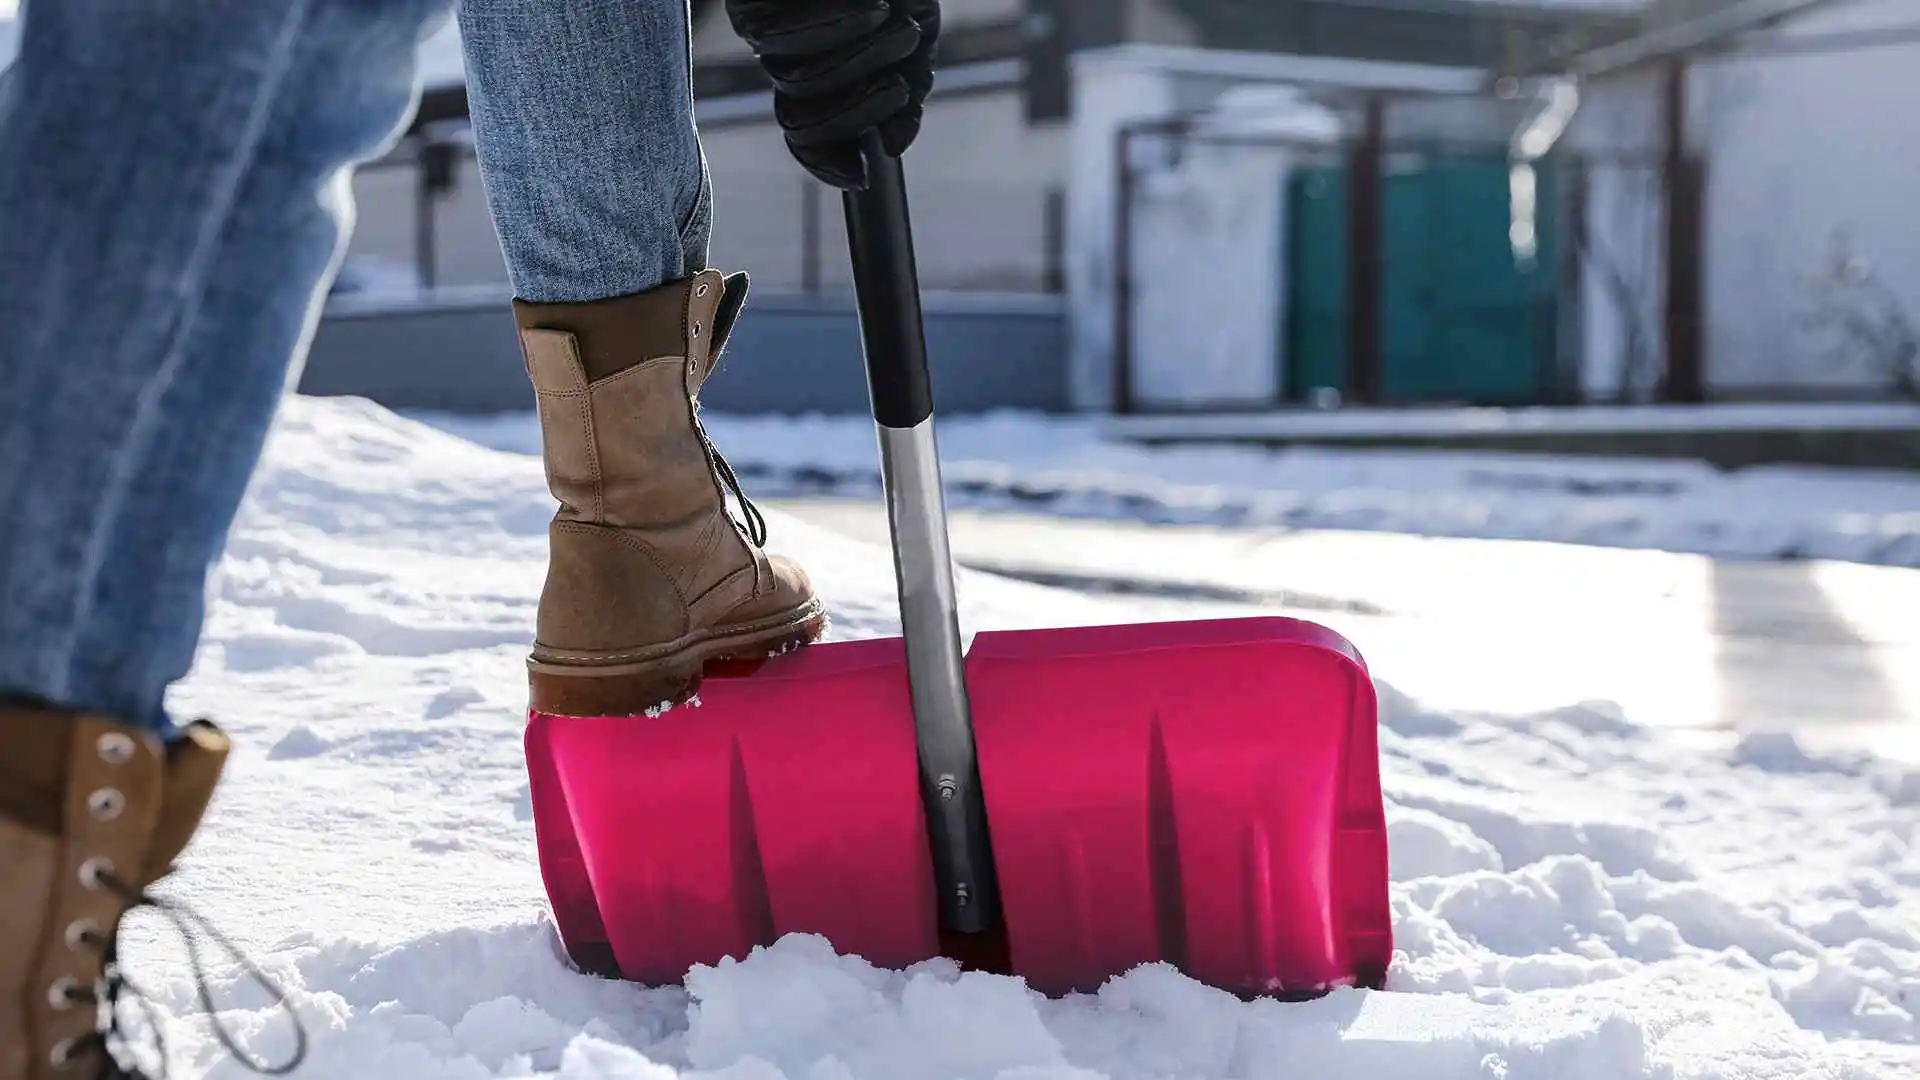 person shoveling snow on sidewalk